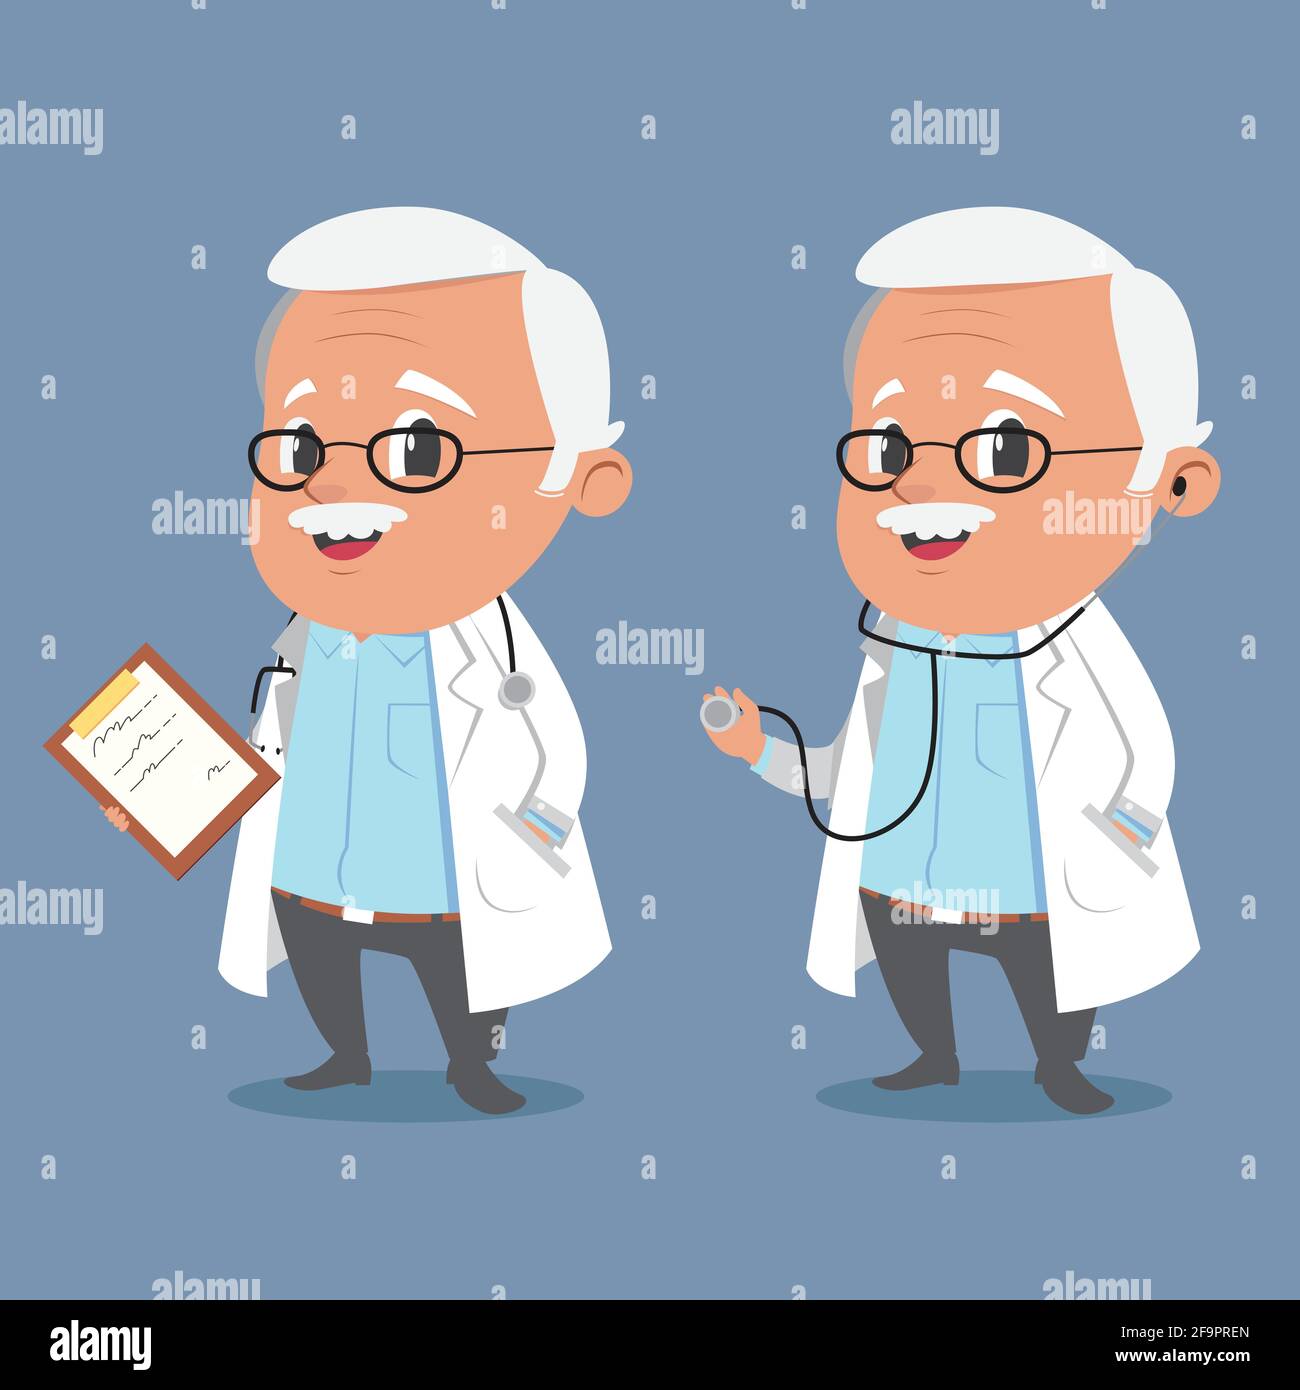 Cartoon mascot of a friendly older doctor Stock Vector